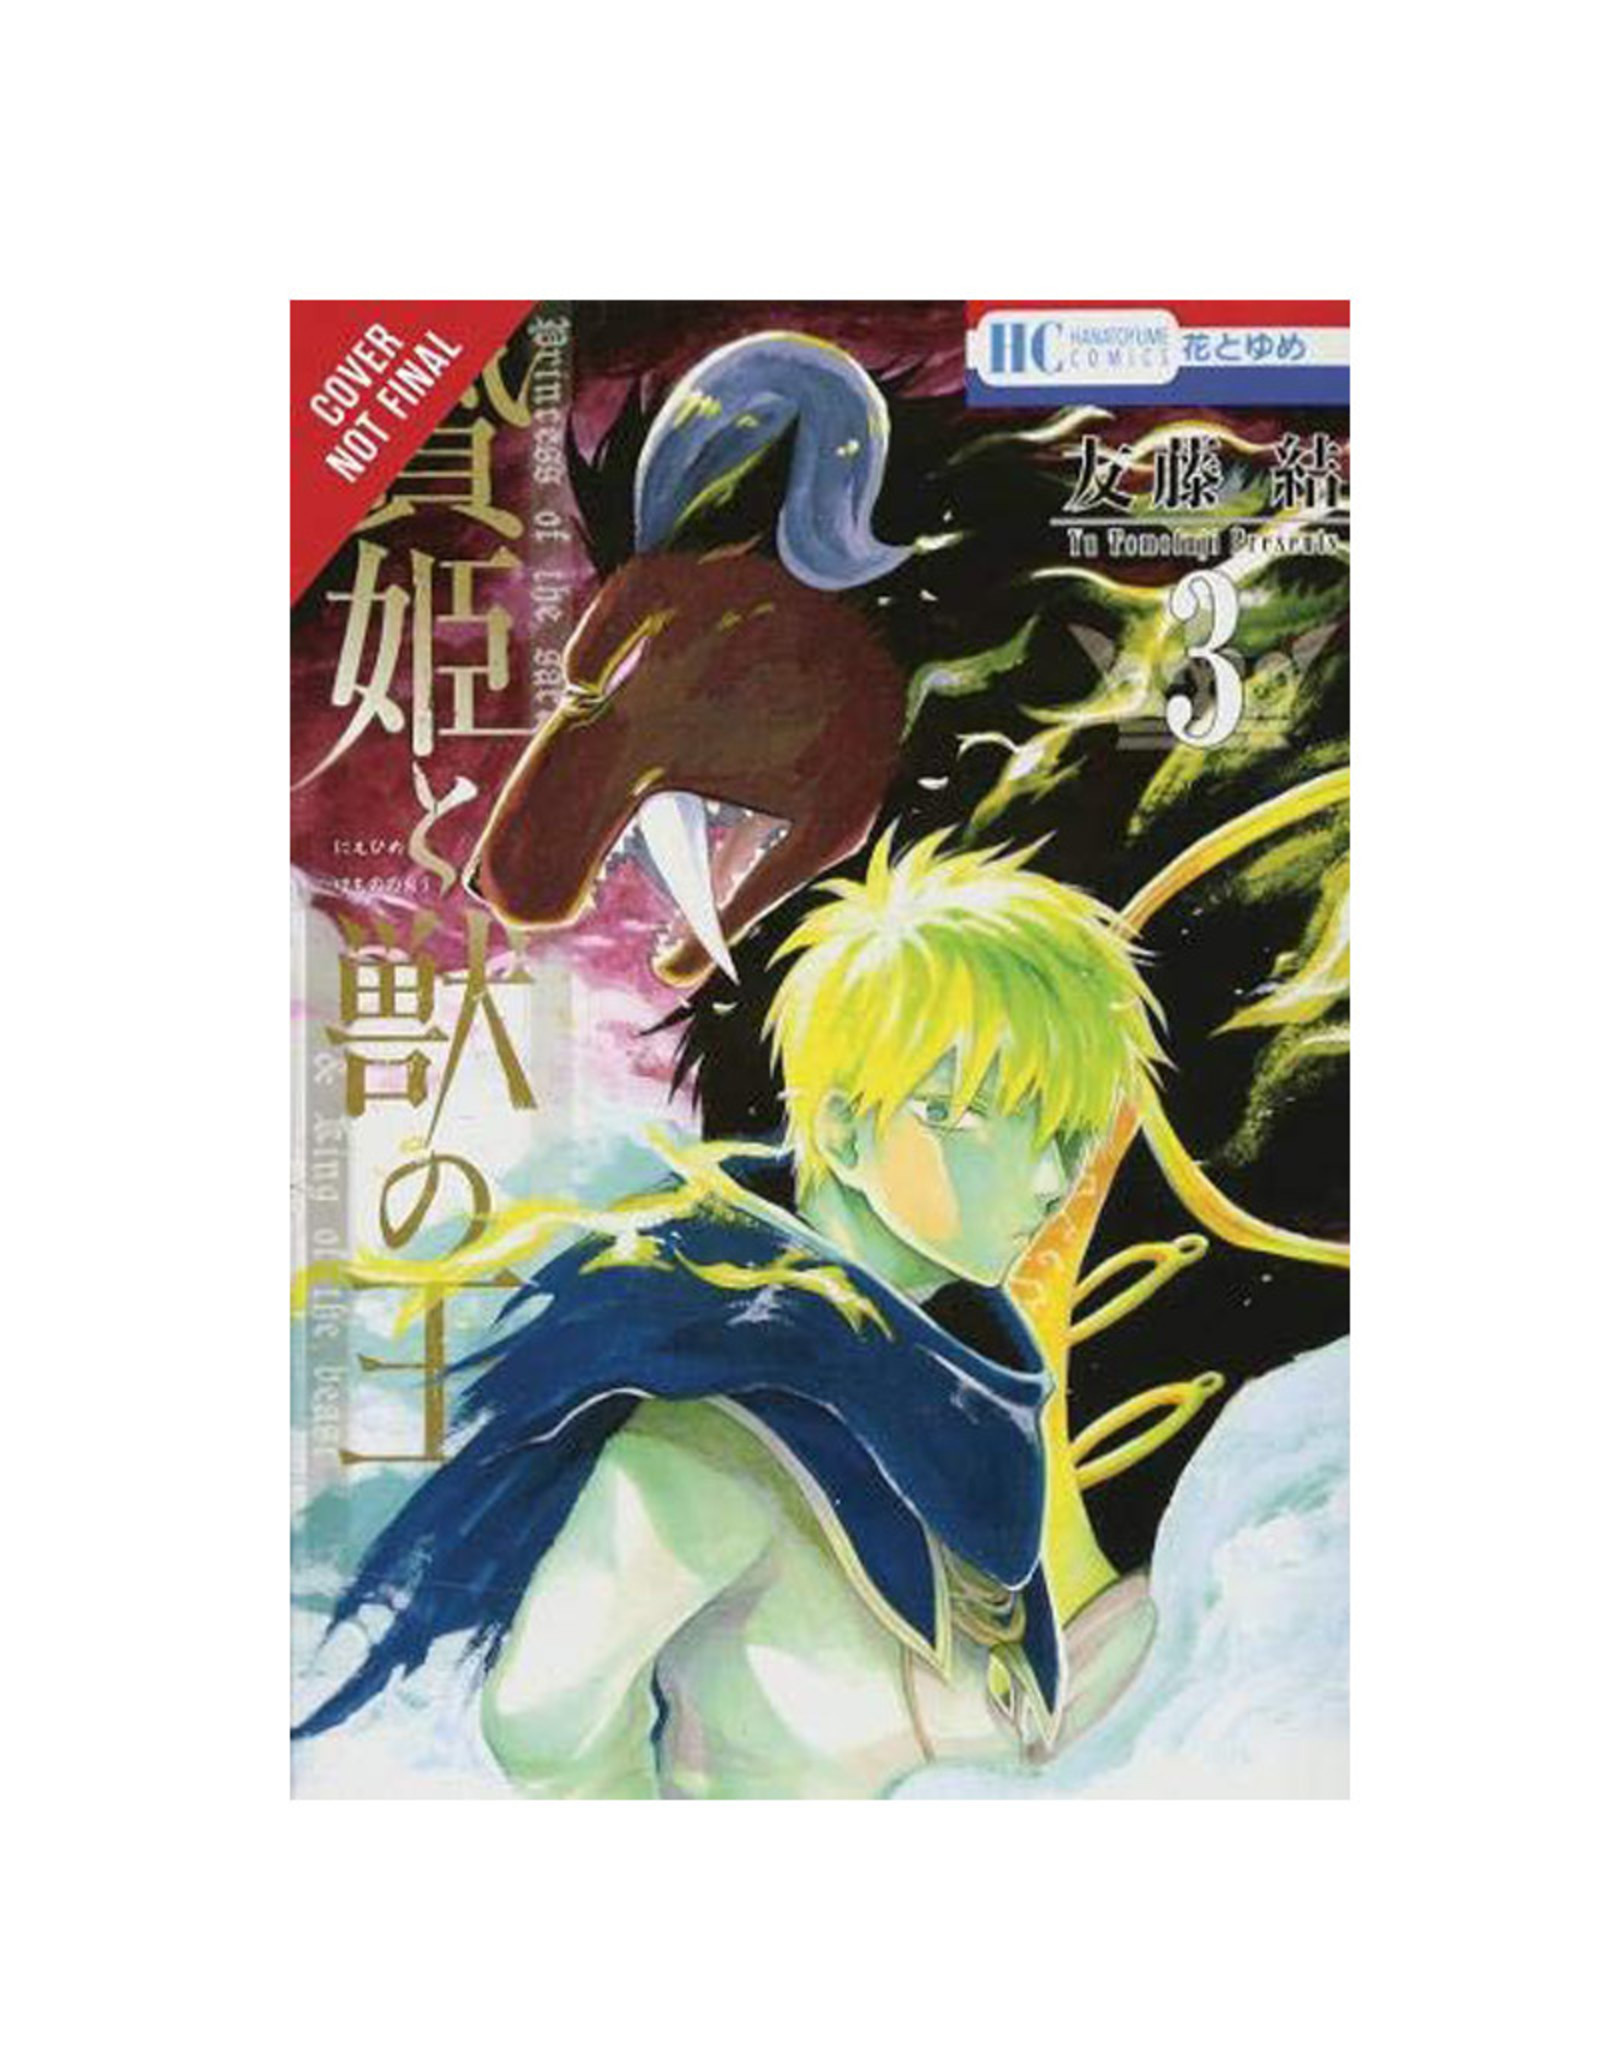 Yen Press Sacrificial Princess  & King of Beasts Volume 03